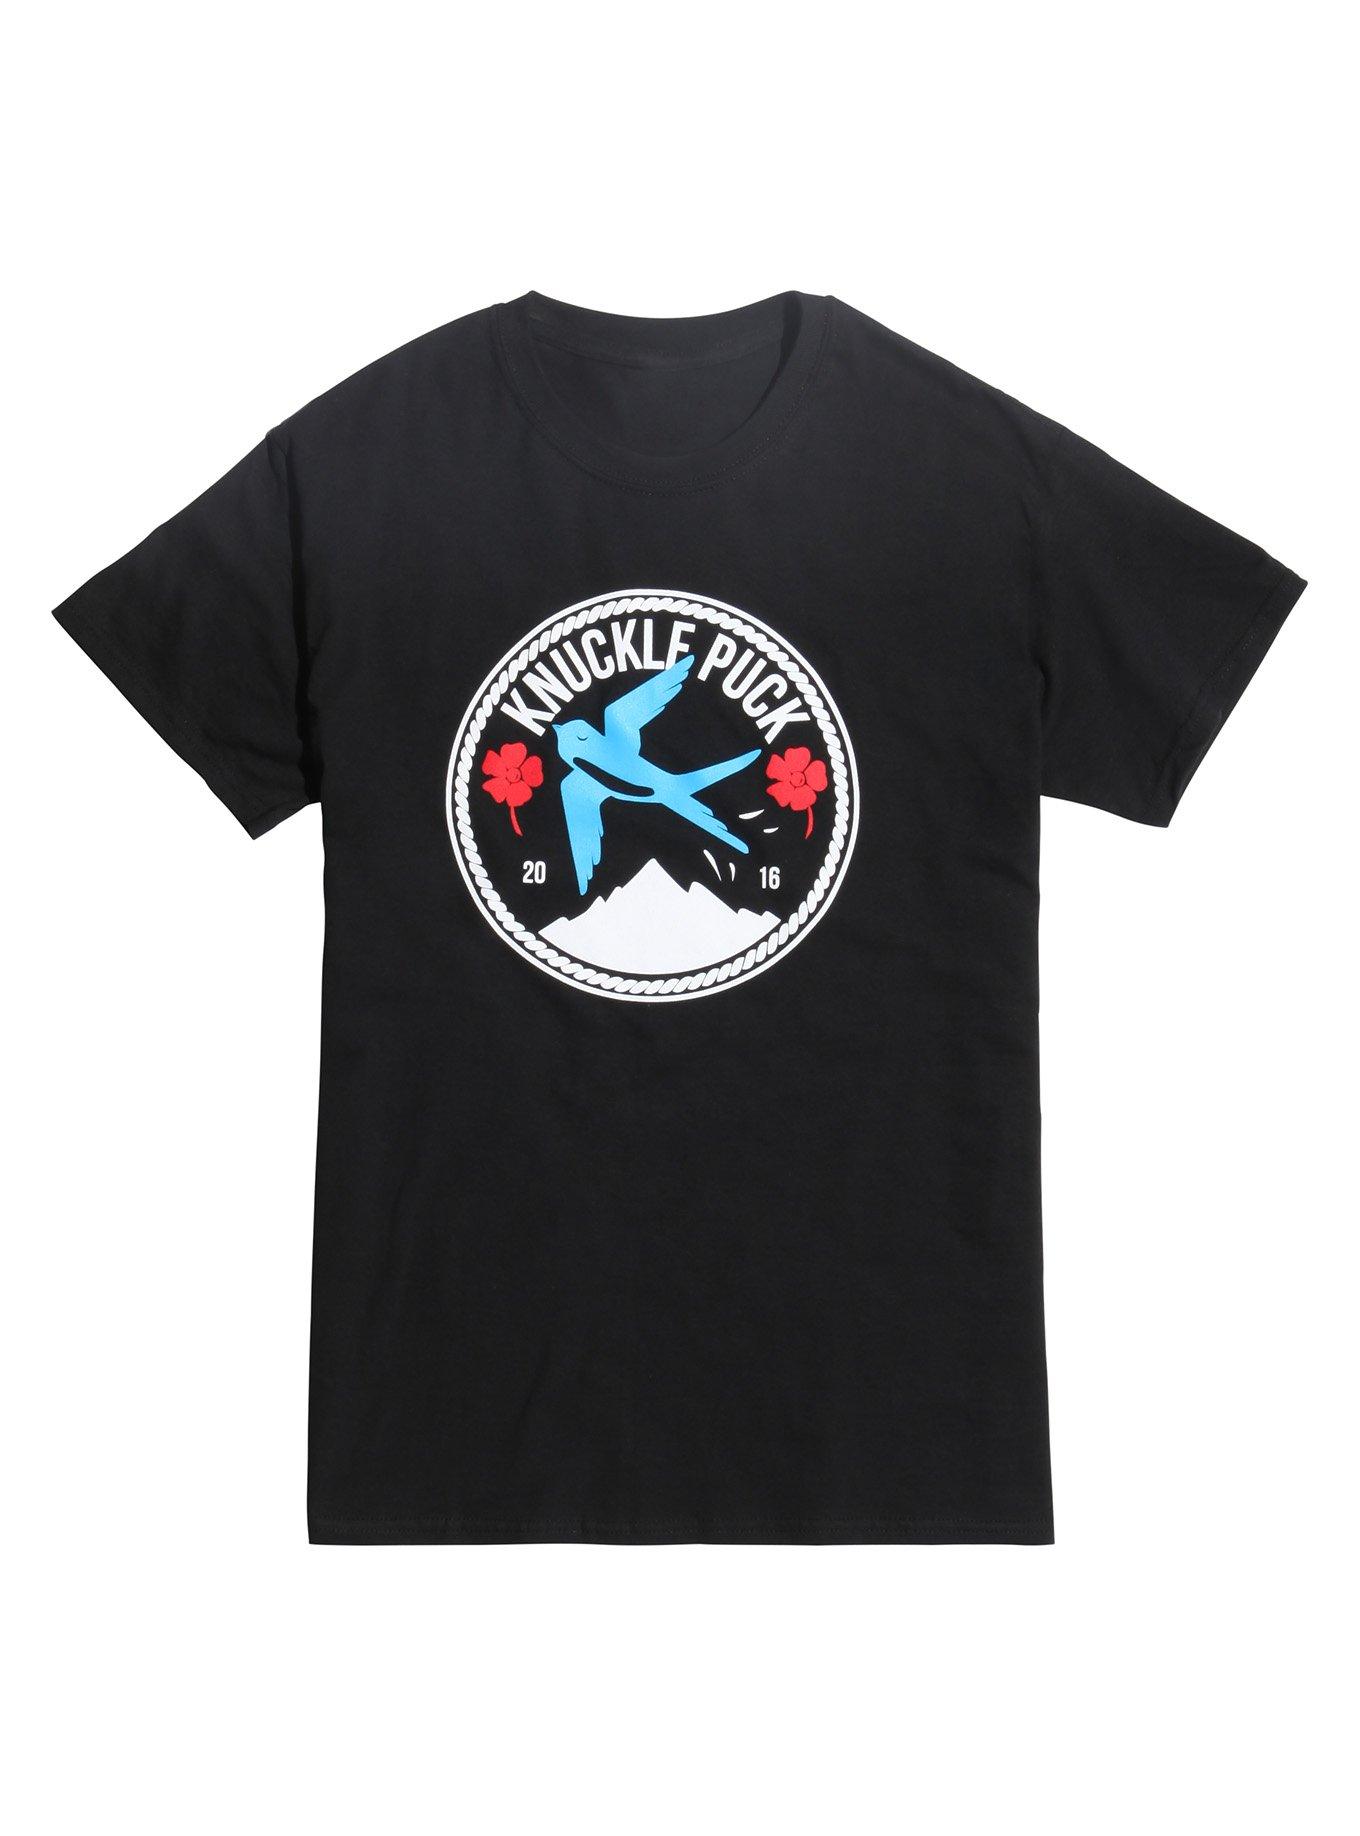 Knucklepuck Blue Jay T-Shirt, BLACK, hi-res